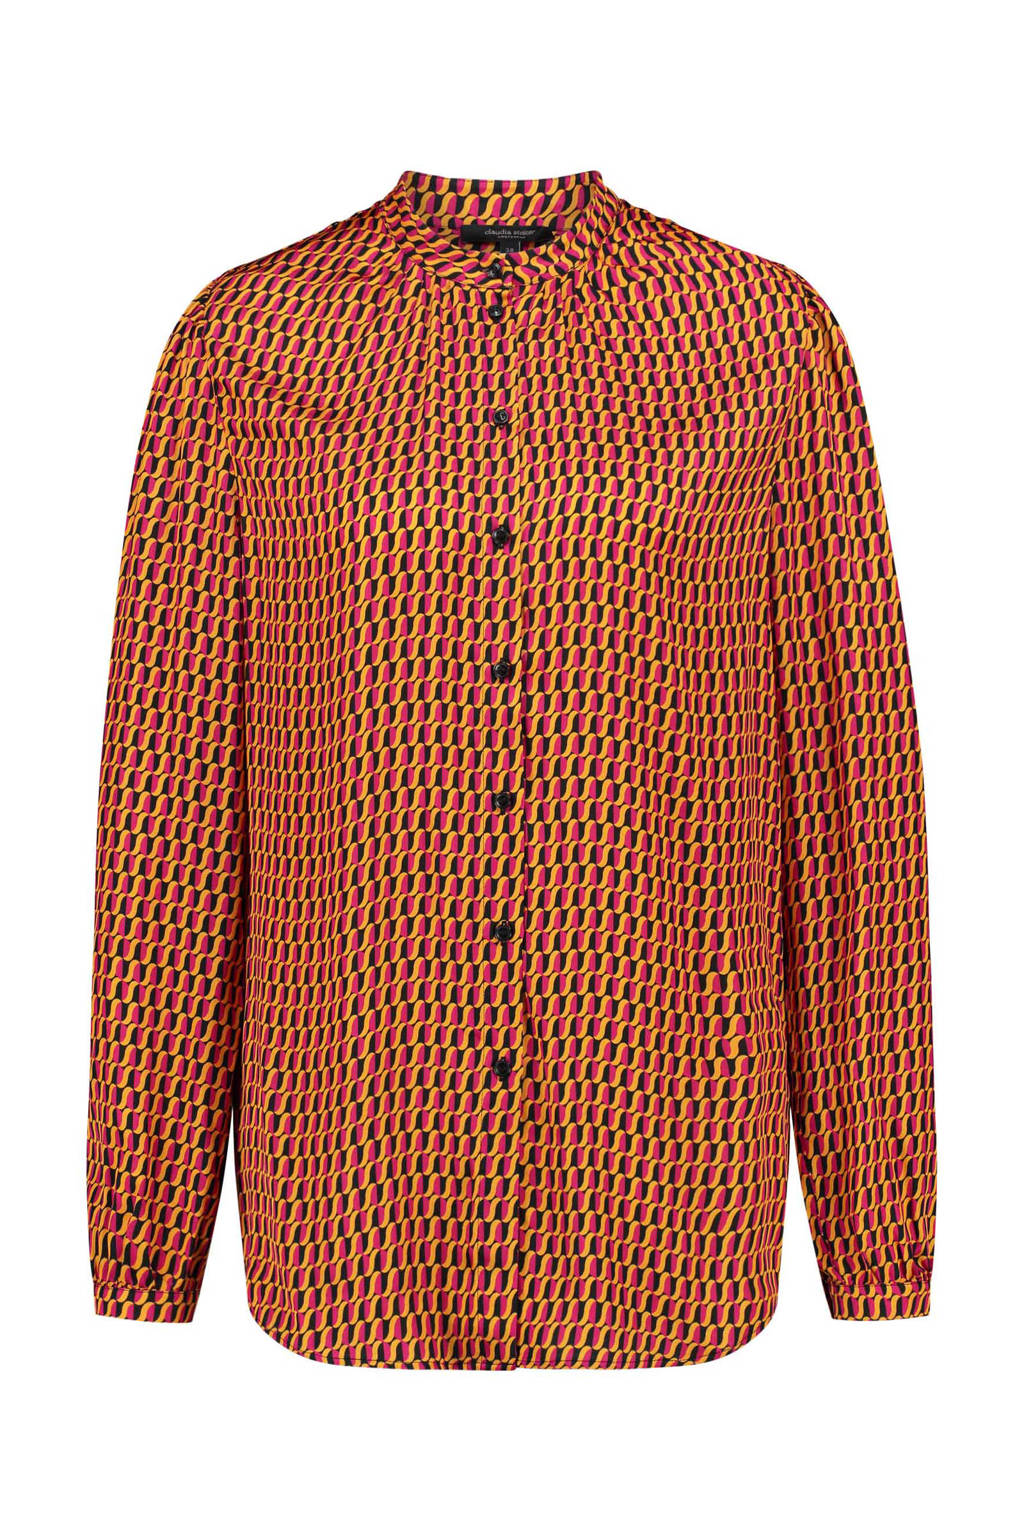 Claudia Sträter blouse met all over print oranje, zwart